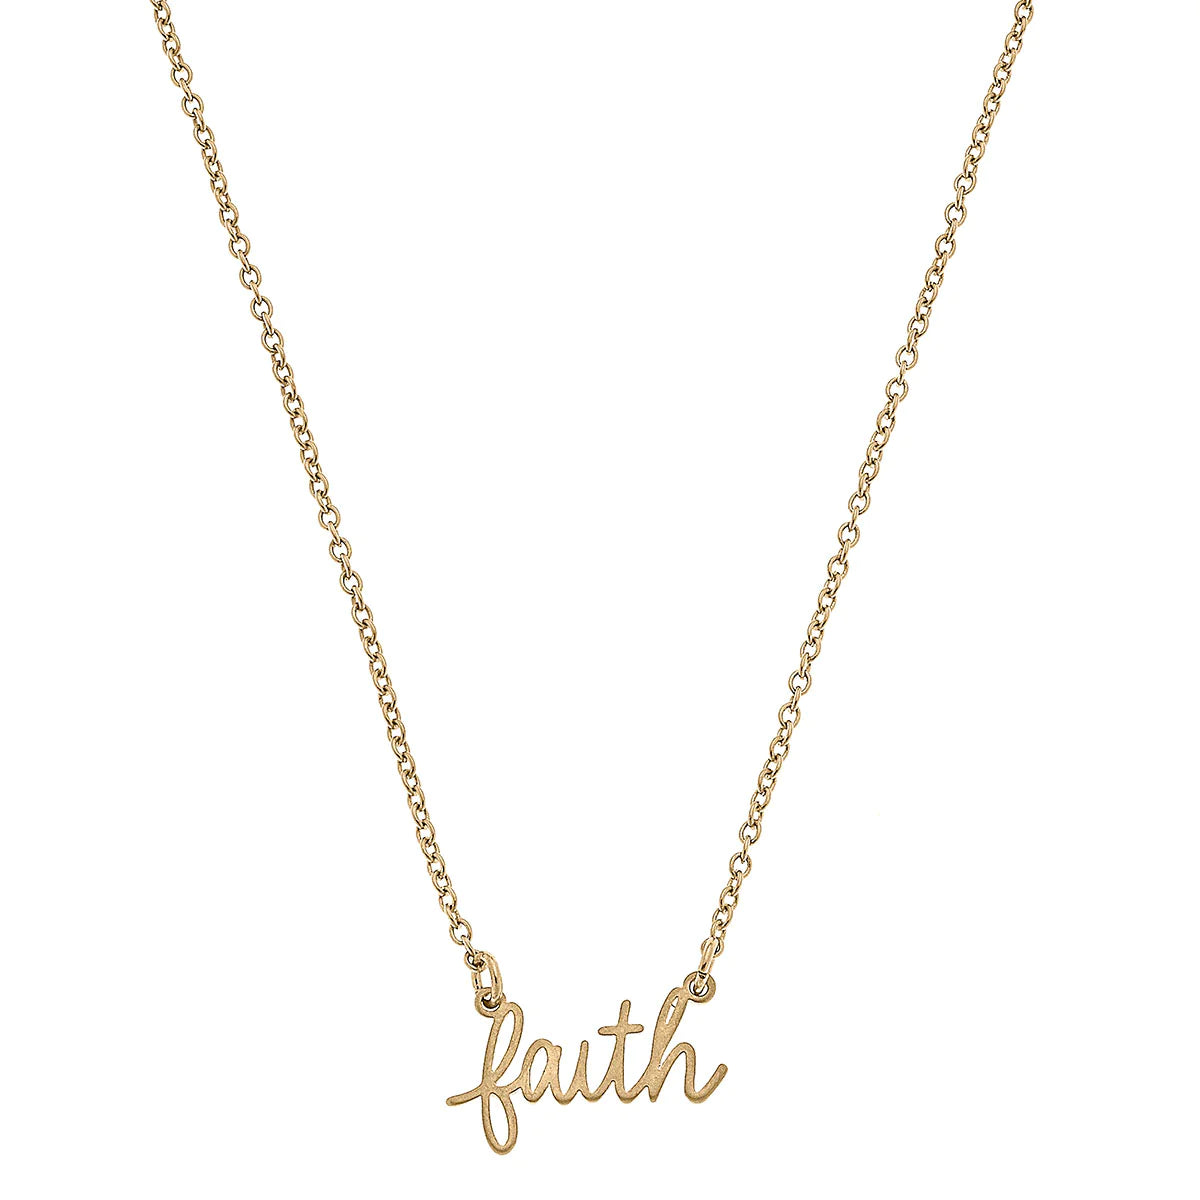 Julia Faith Delicate Chain Necklace in Worn Gold